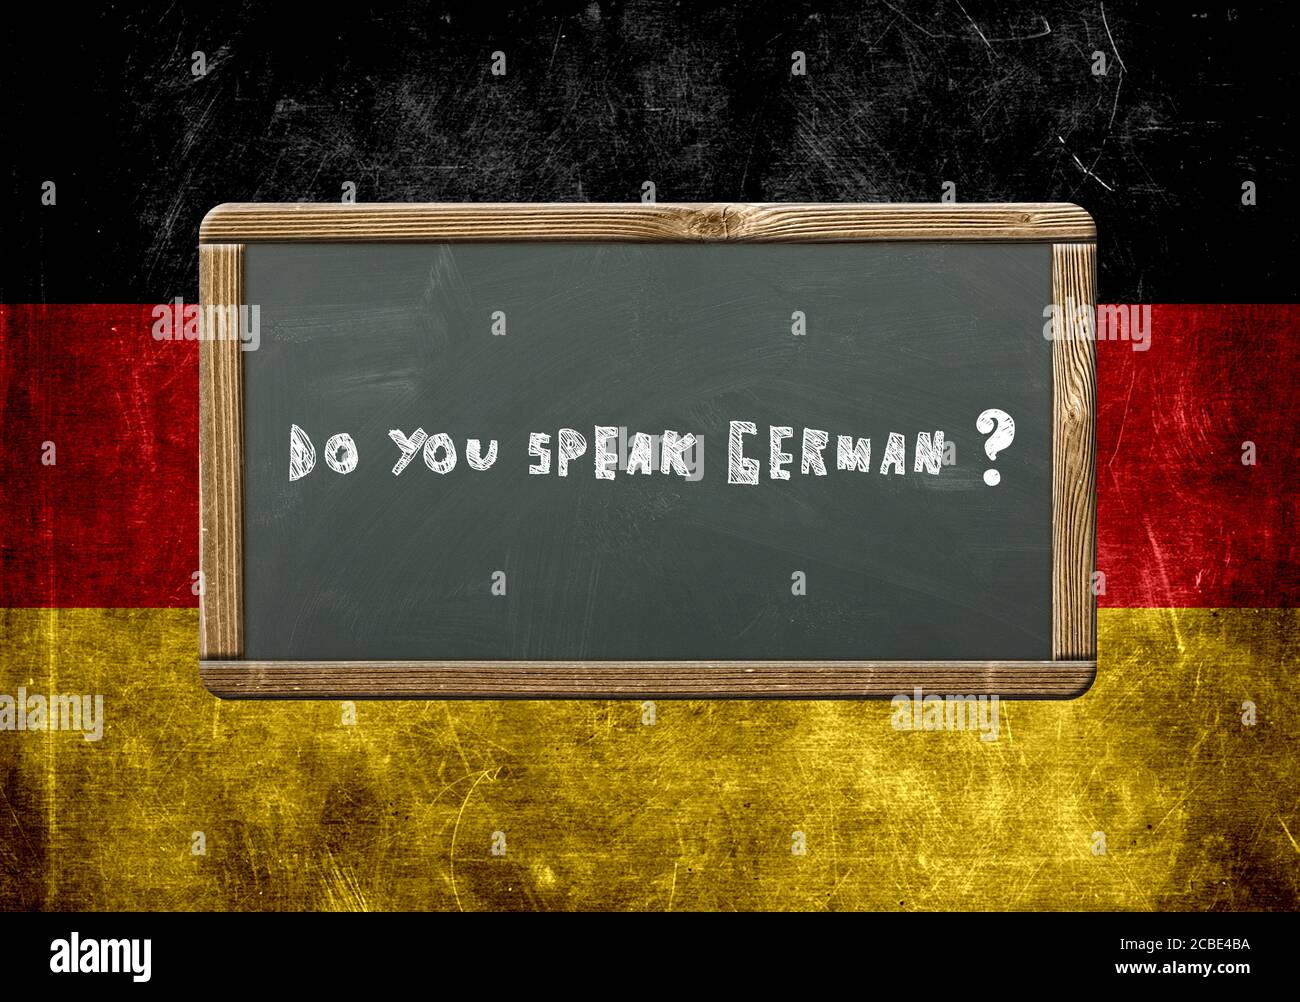 Do you speak german Stock Photo